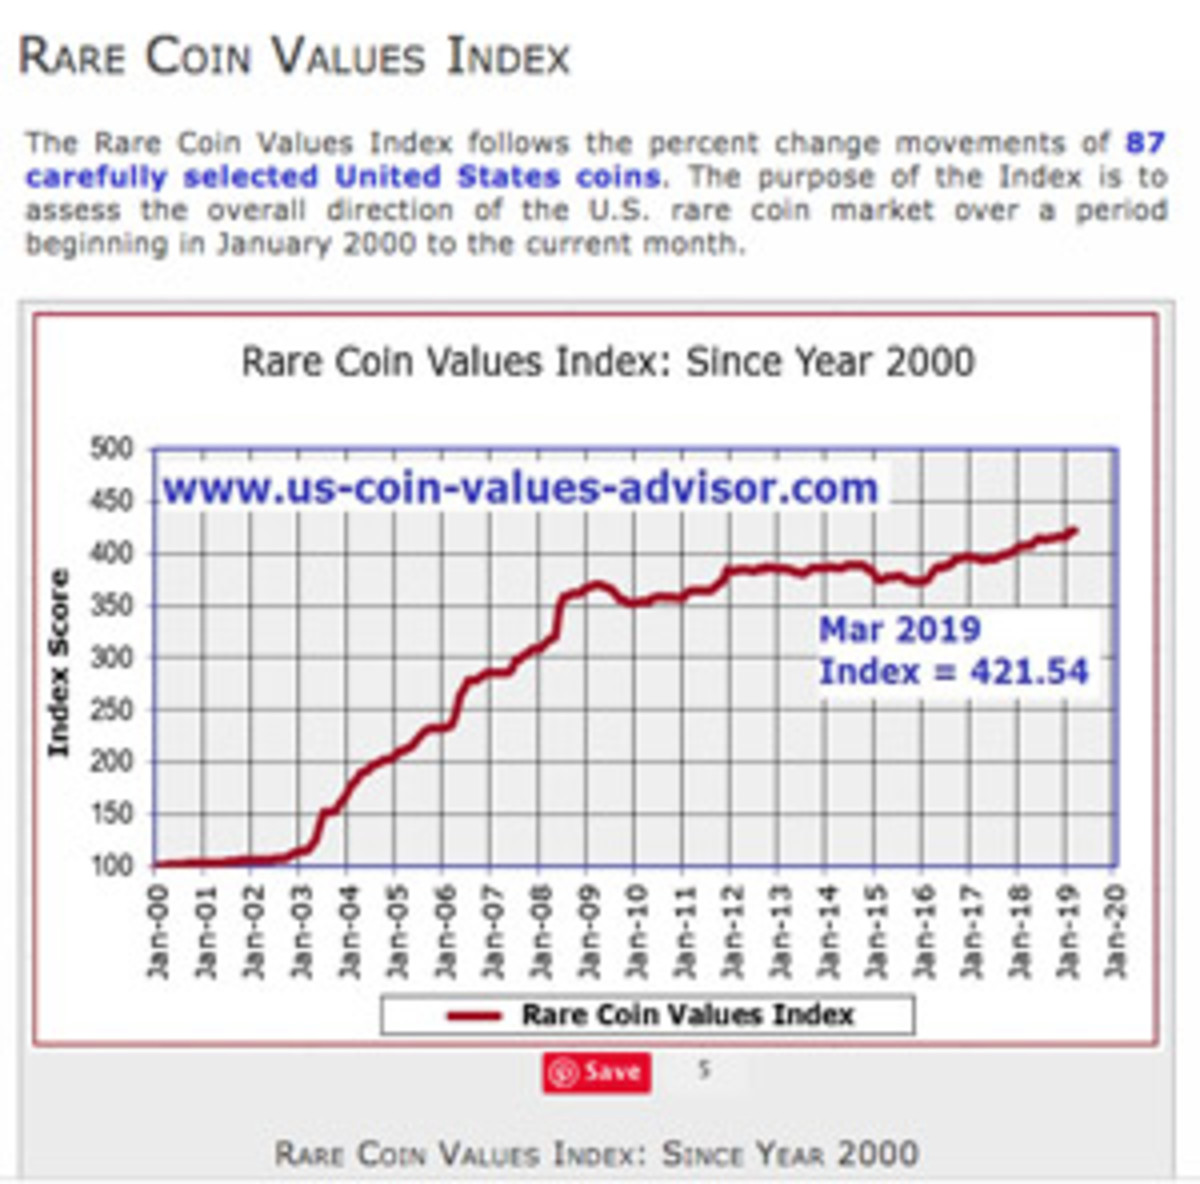  (Image courtesy www.us-coin-values-advisor.com/rare-coin-values-index.html)